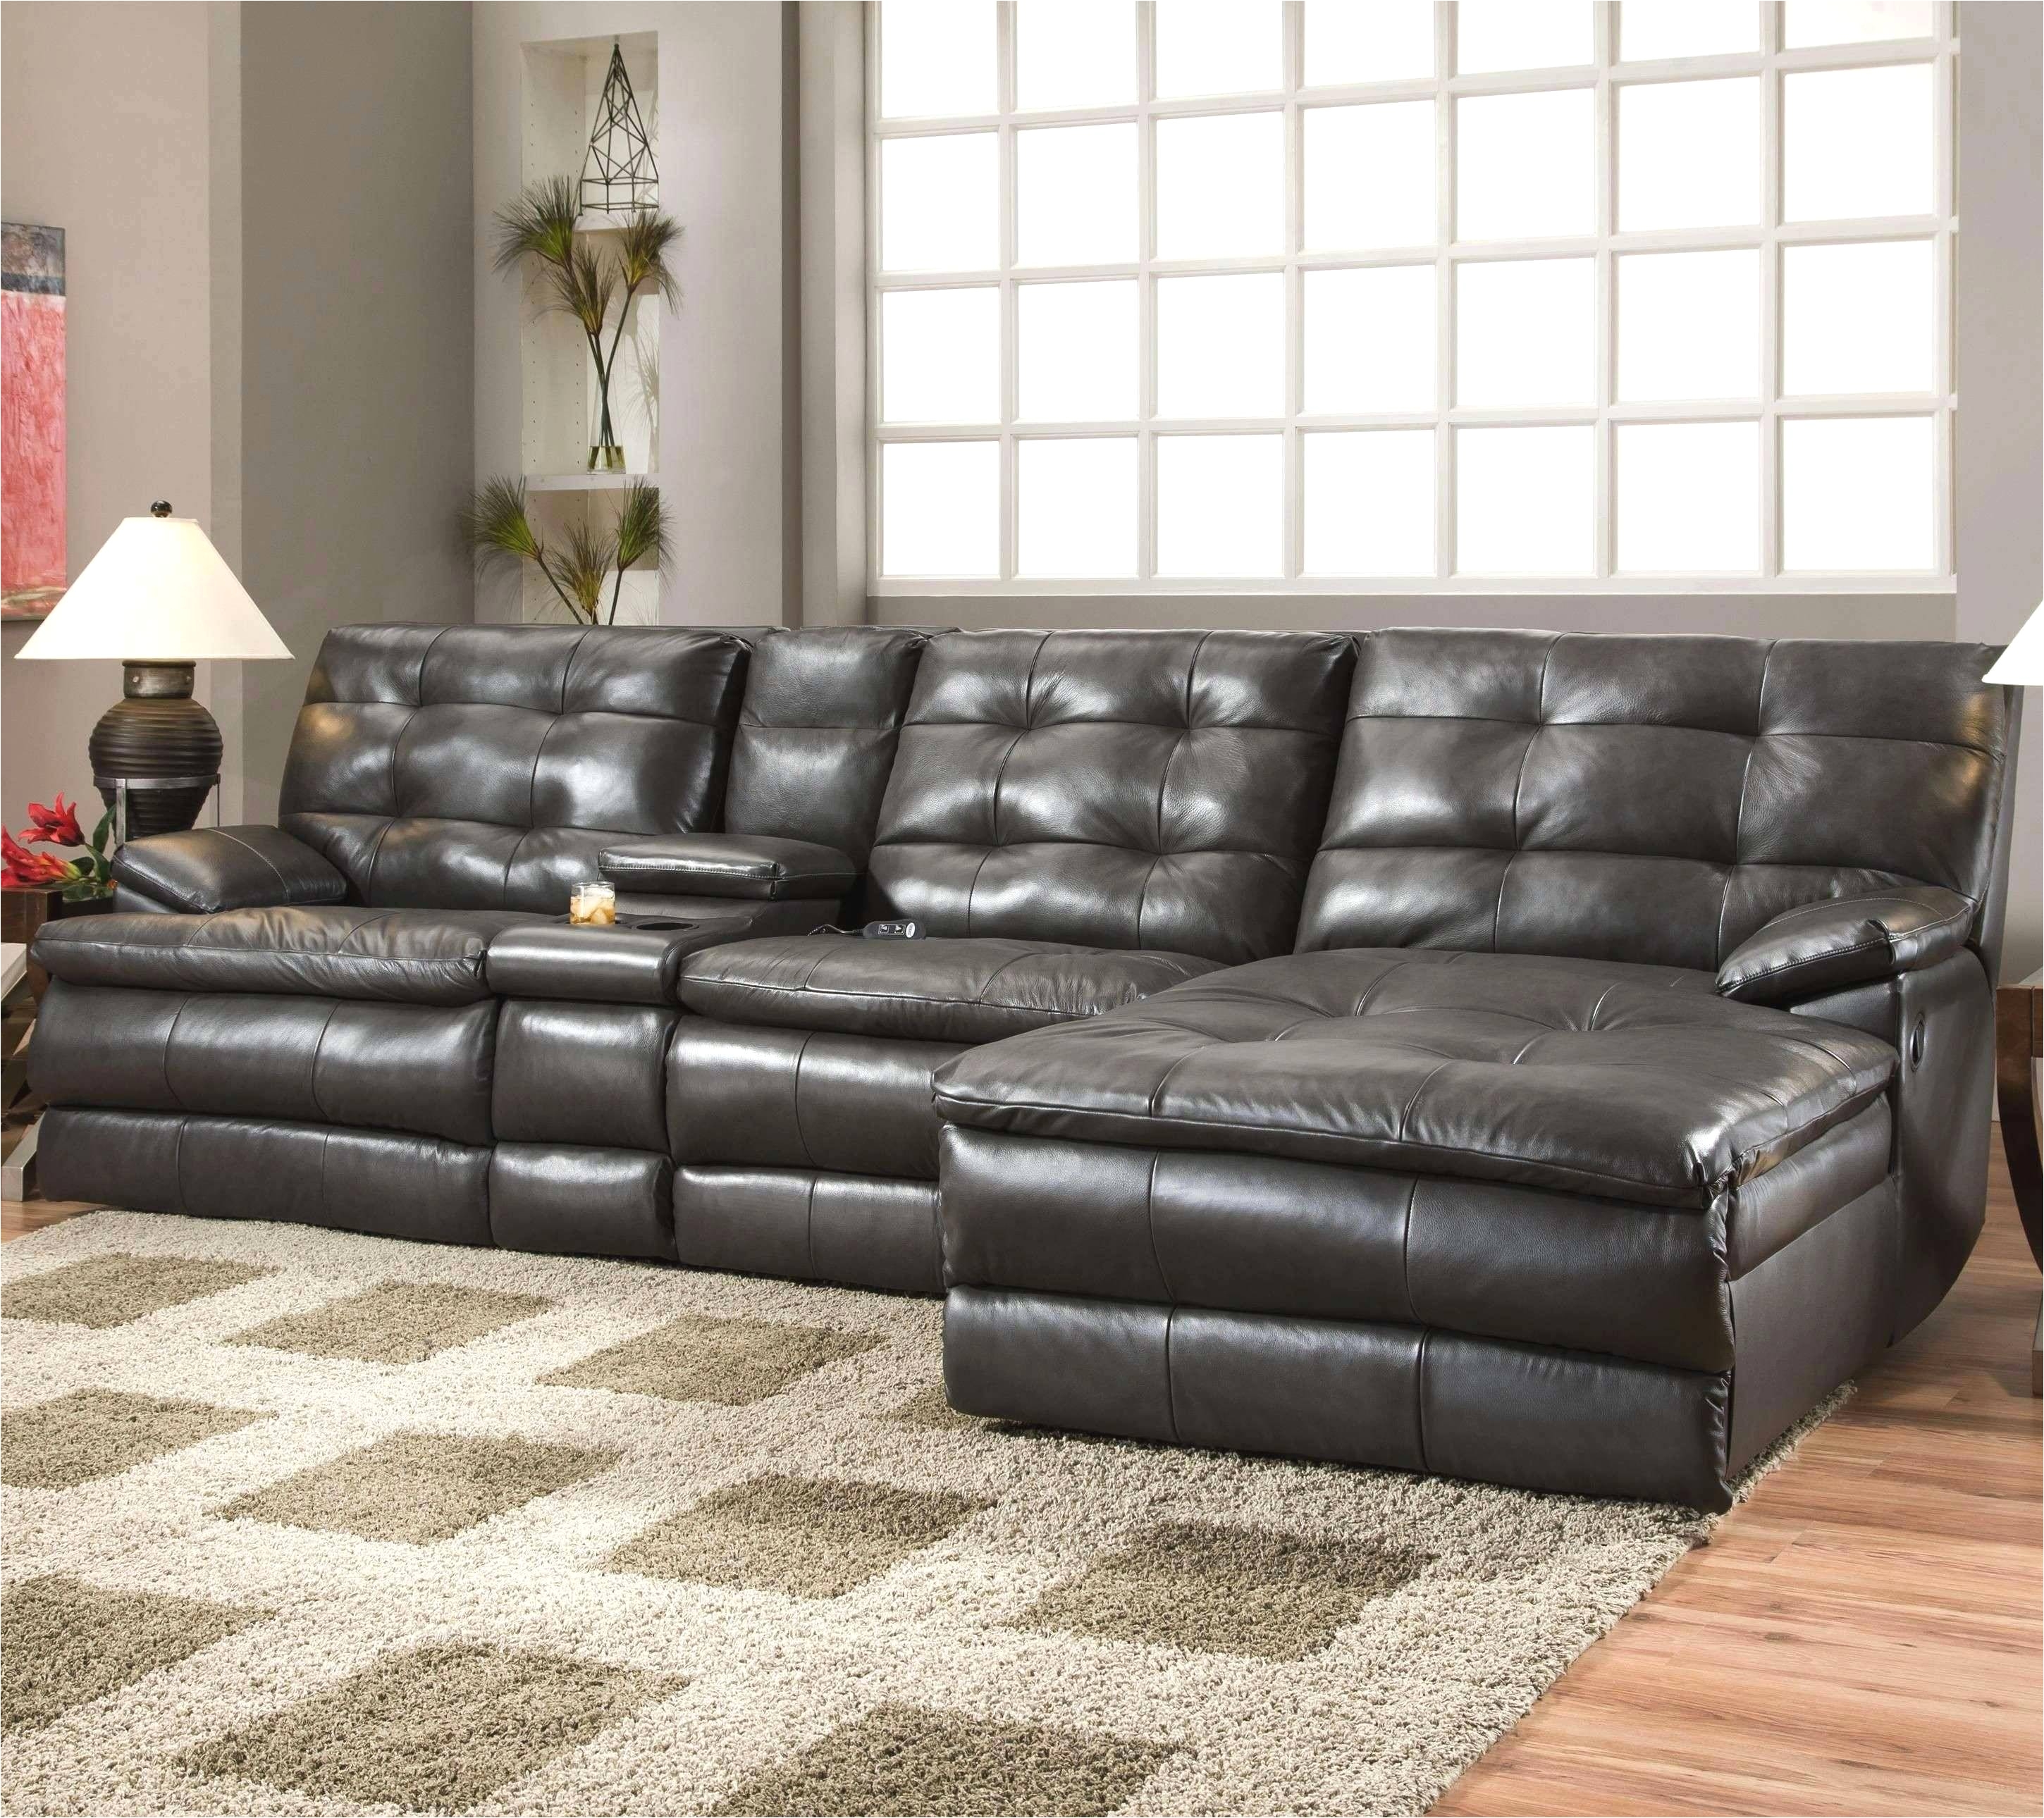 Leather sofa Living Room Ideas Captivating Designer sofa Lovely Graues Schlafsofa 0d Archives sofa Ideas Design